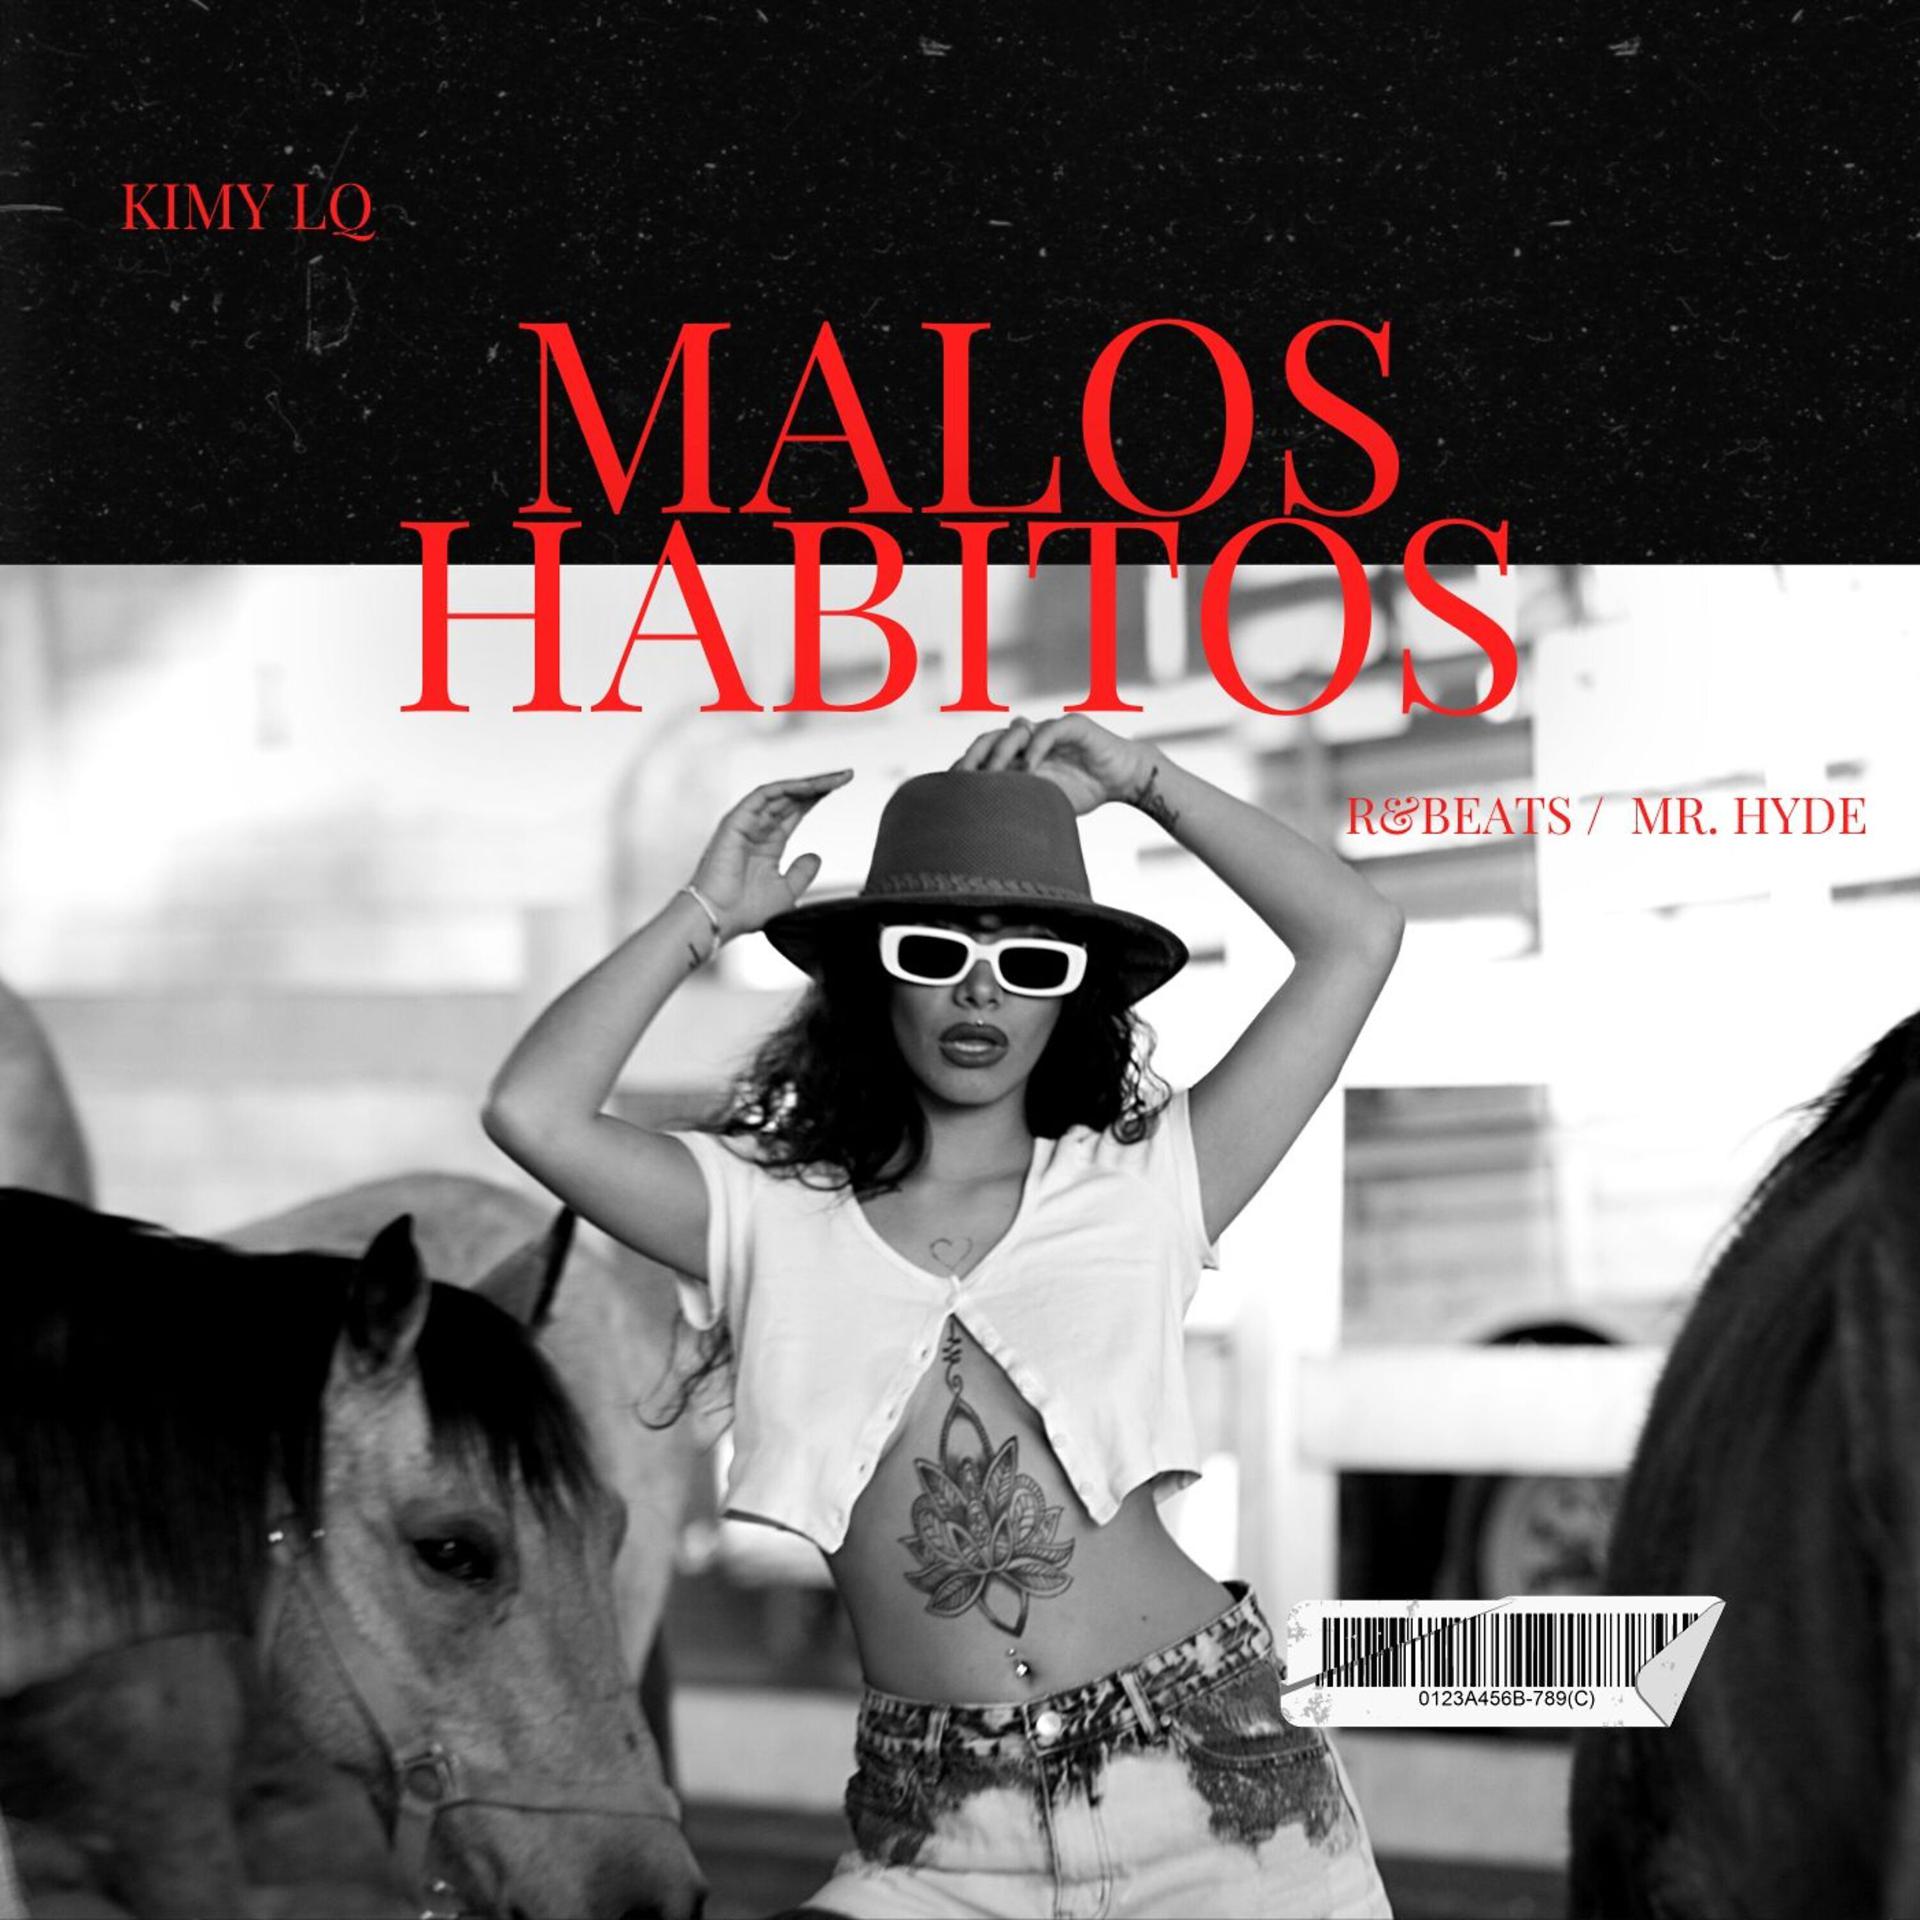 Постер к треку Kimy LQ, R & BEATZ, Mr. Hyde - Malos Habitos